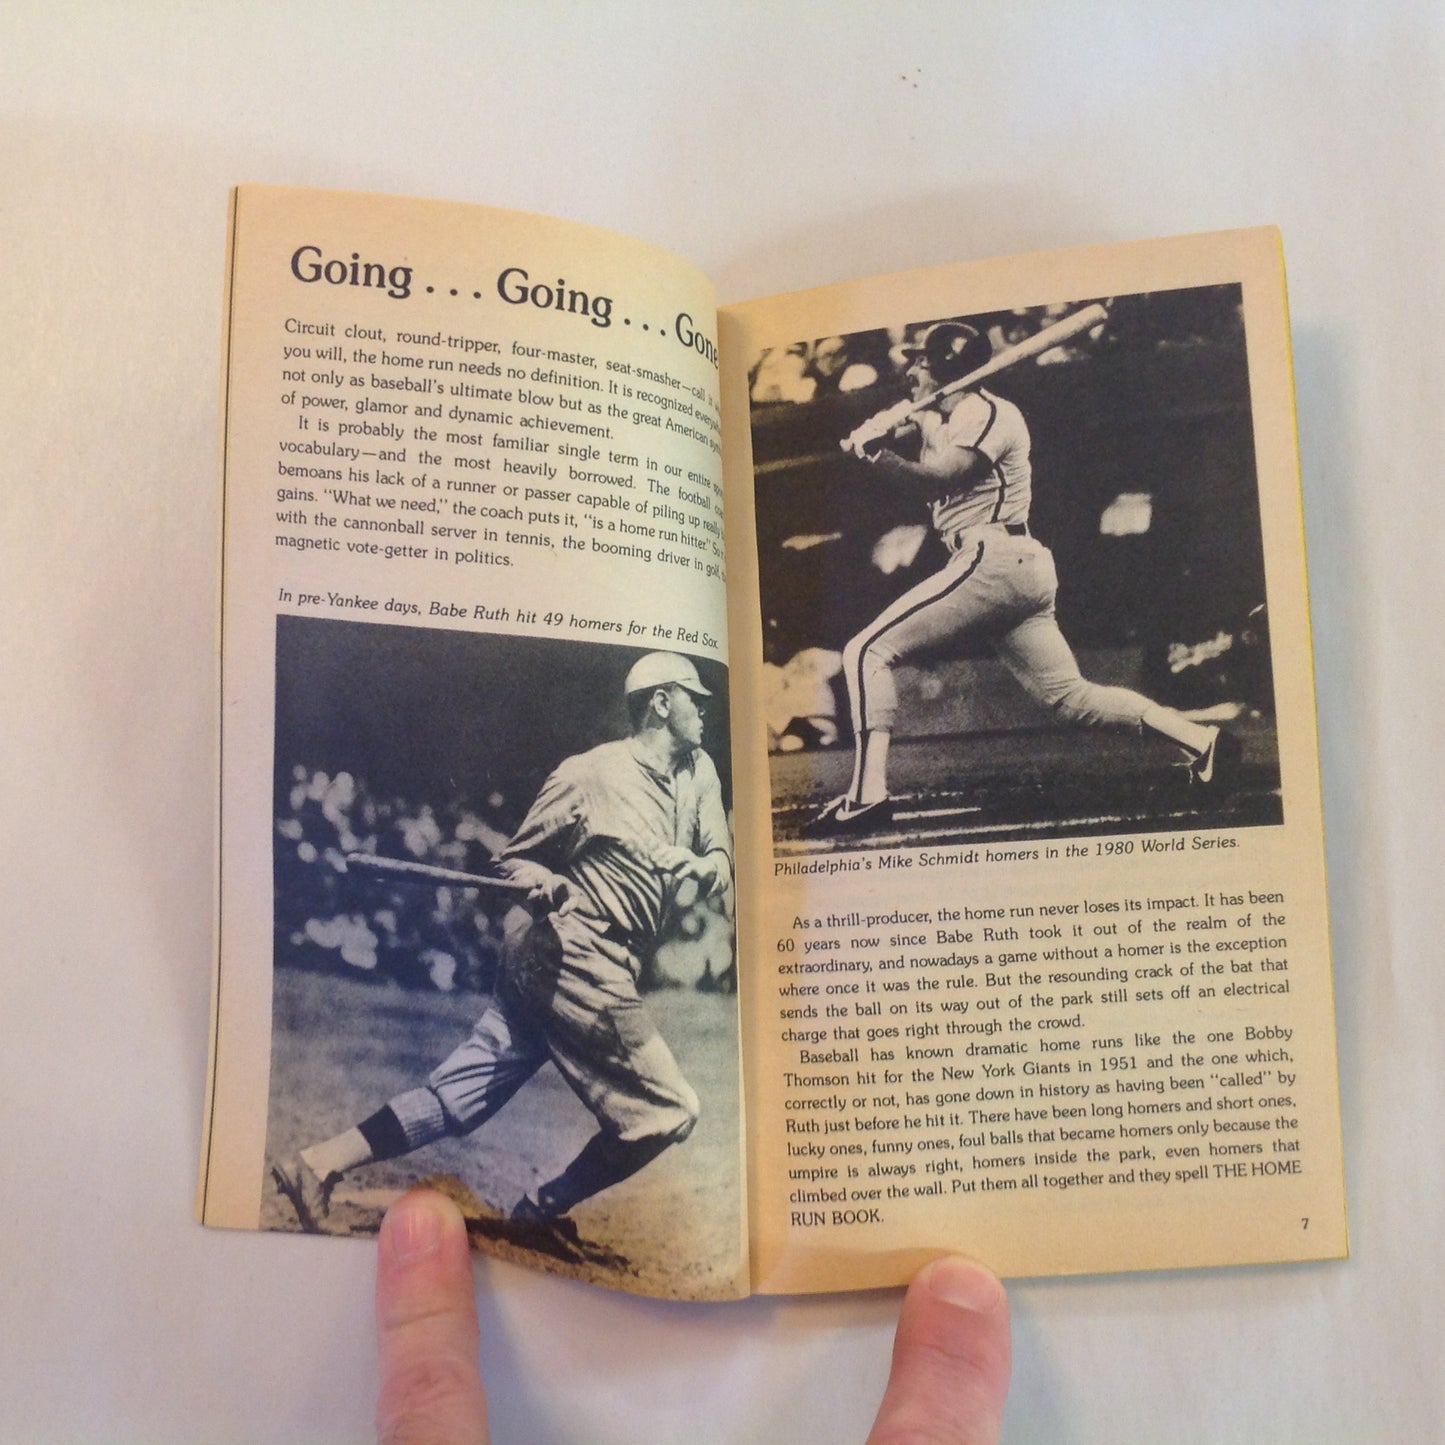 Vintage 1981 Mass Market Paperback Topps The Home Run Book Zander Hollander, Ed